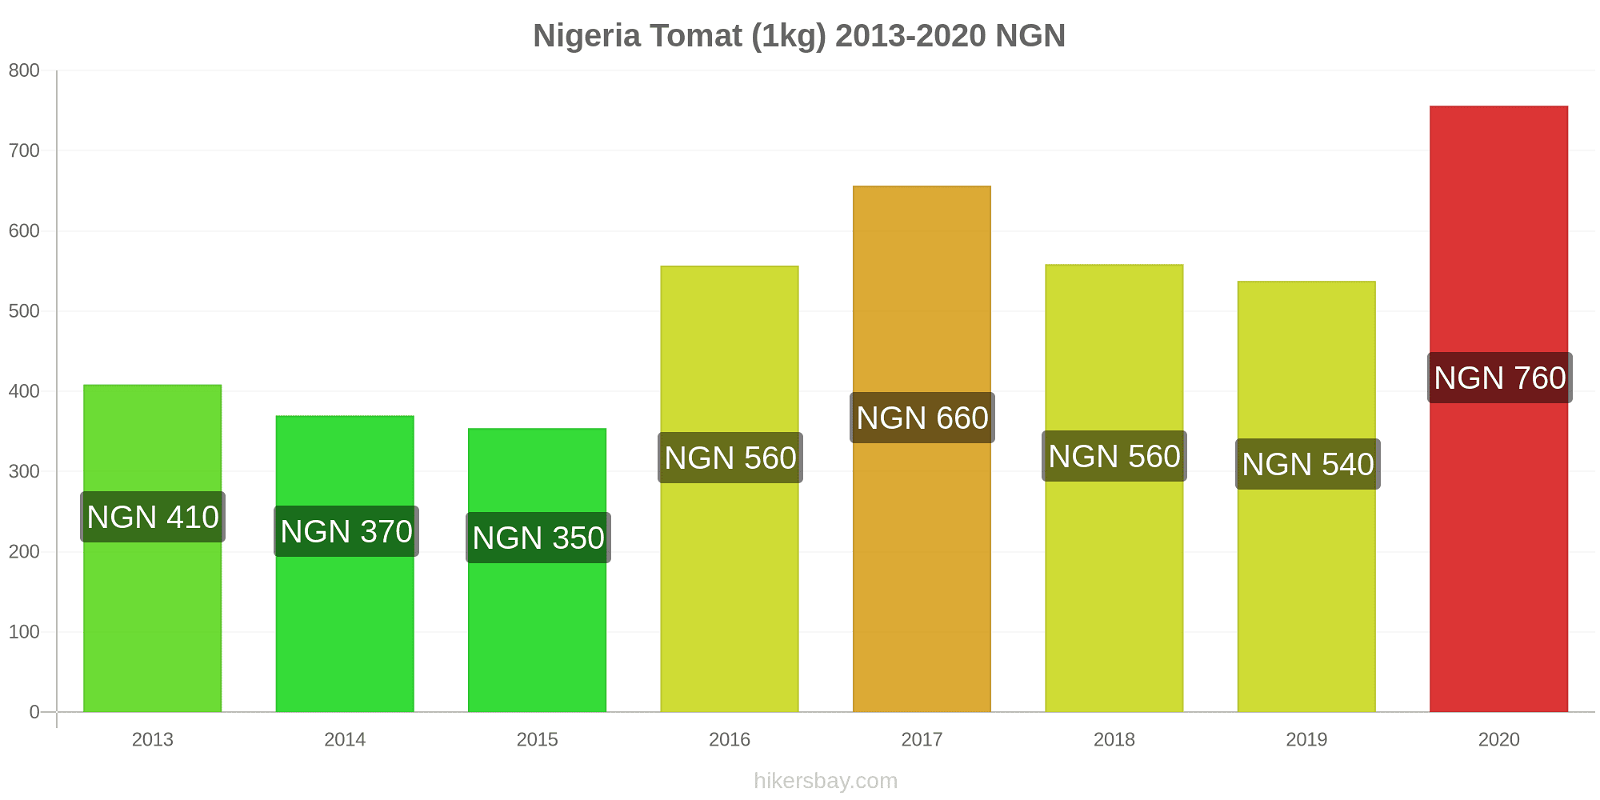 Nigeria prisendringer Tomat (1kg) hikersbay.com